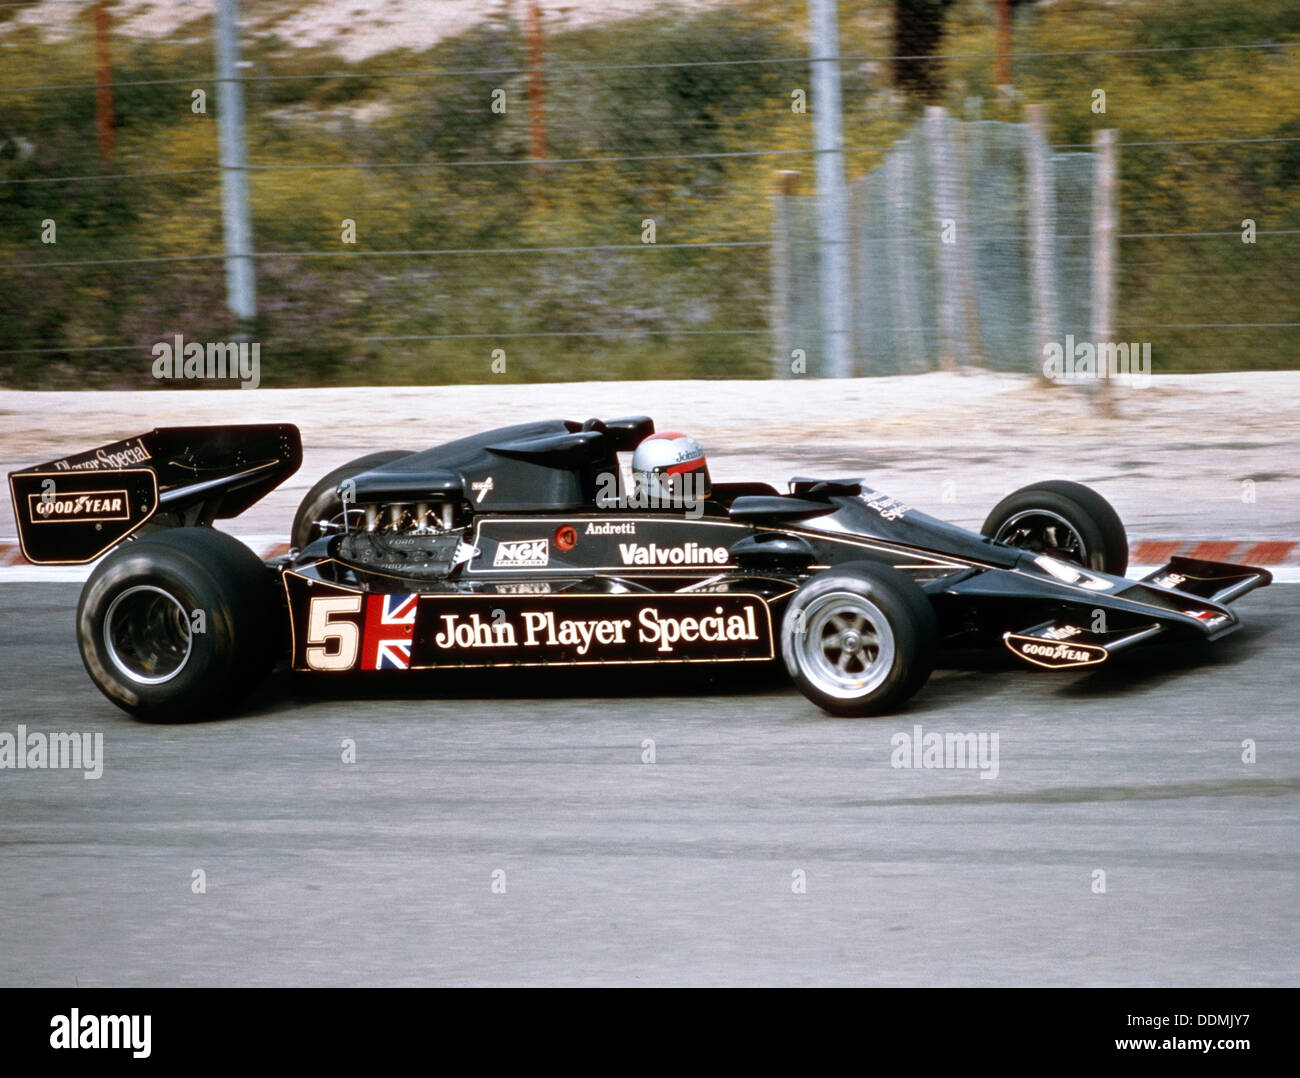 Mario Andretti racing un JPS Lotus-Cosworth 78, Grand Prix d'Espagne, Jarama, Espagne, 1977. Artiste : Inconnu Banque D'Images